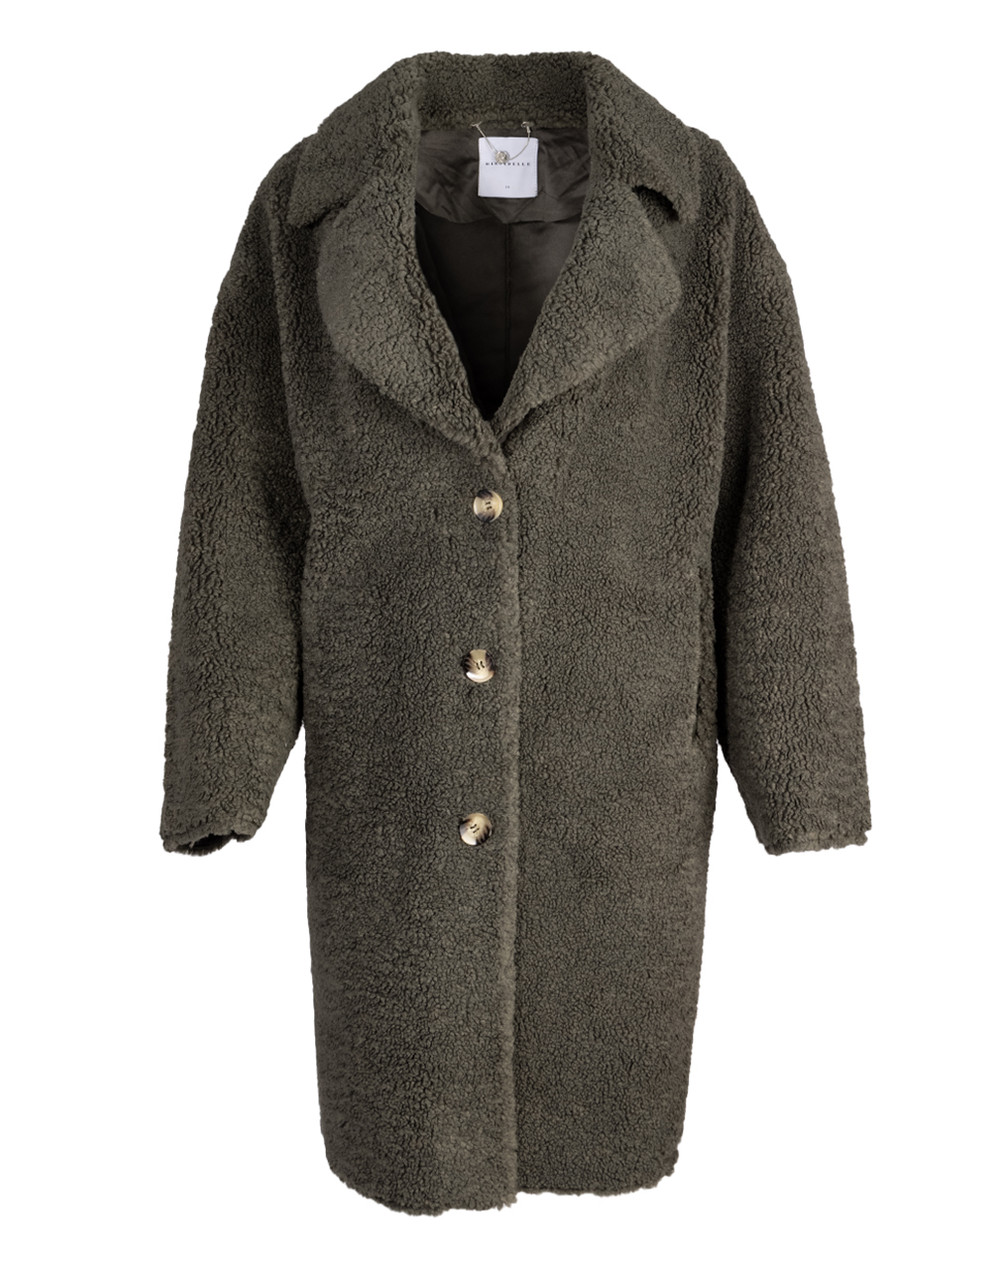 RINO & PELLE Caprice faux shearling jacket| Avalon Clothing